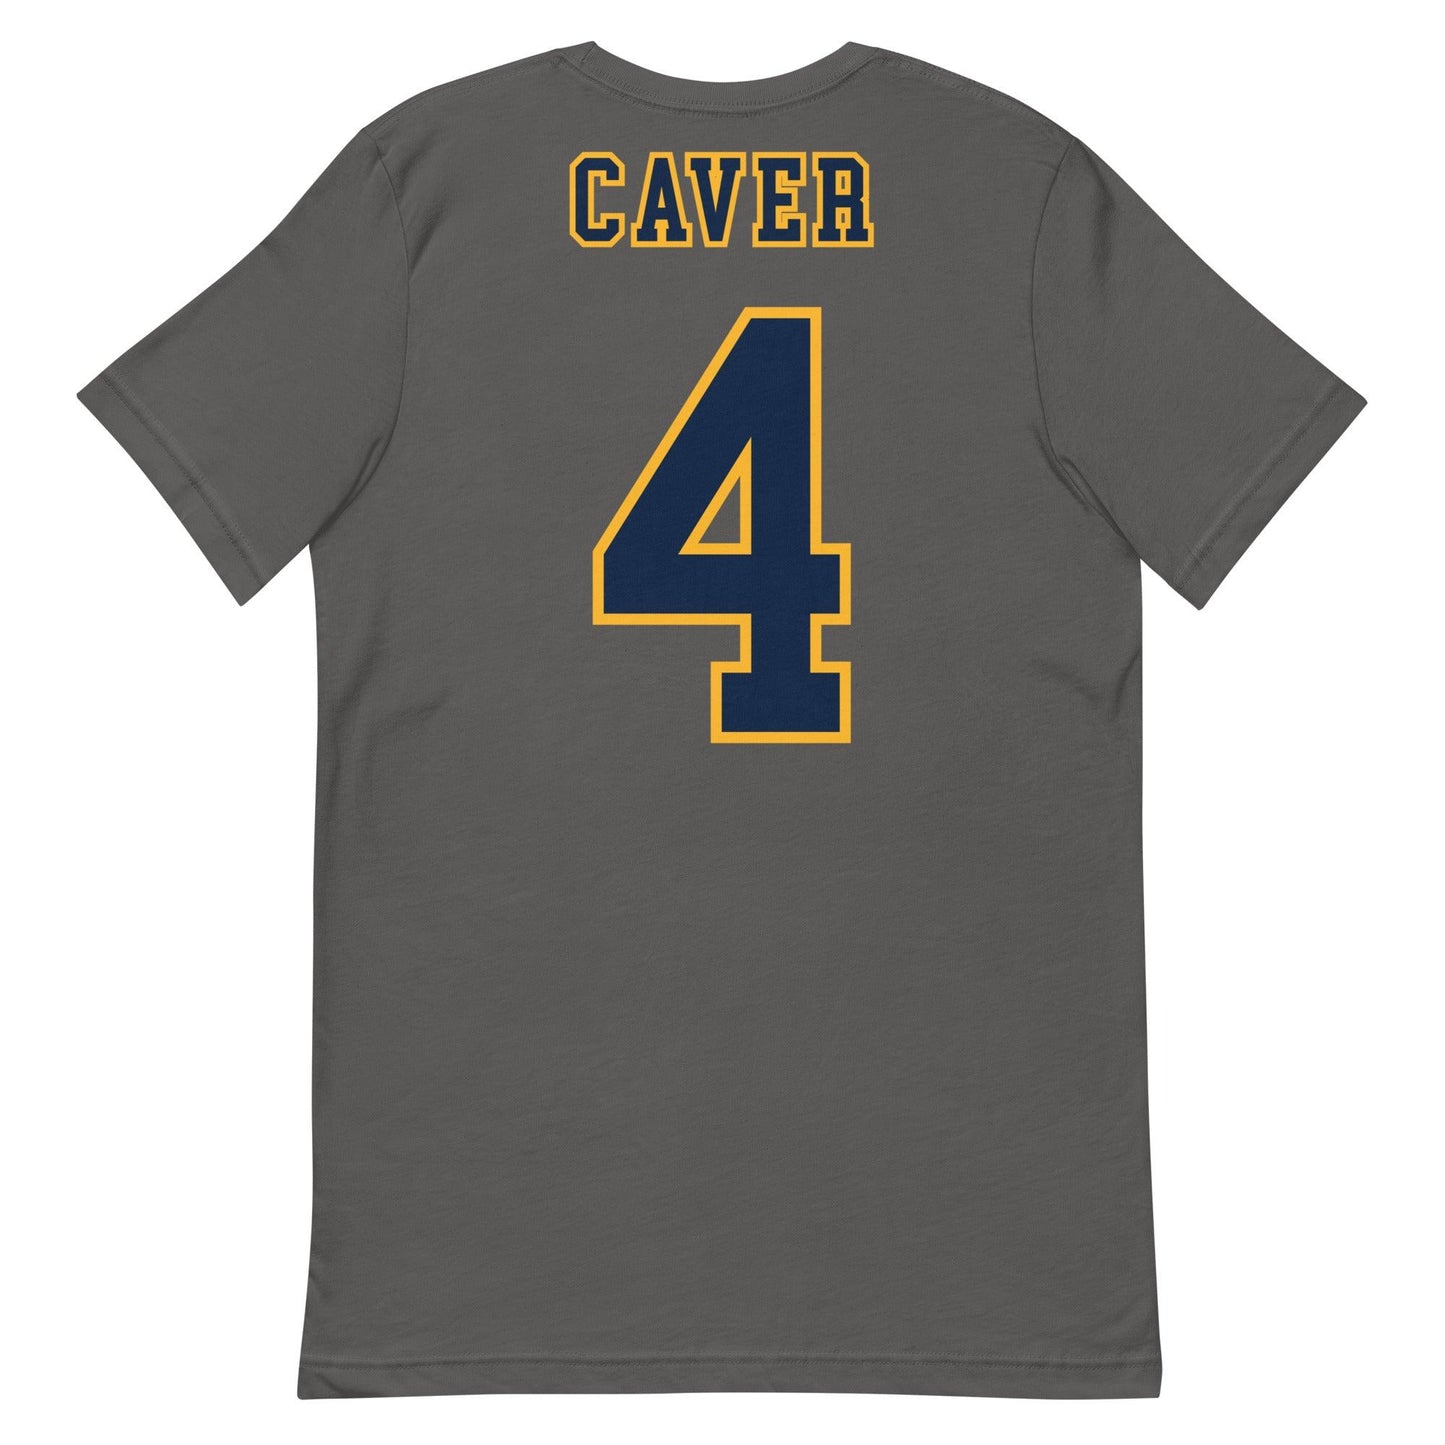 Ahmad Caver "Jersey" t-shirt - Fan Arch